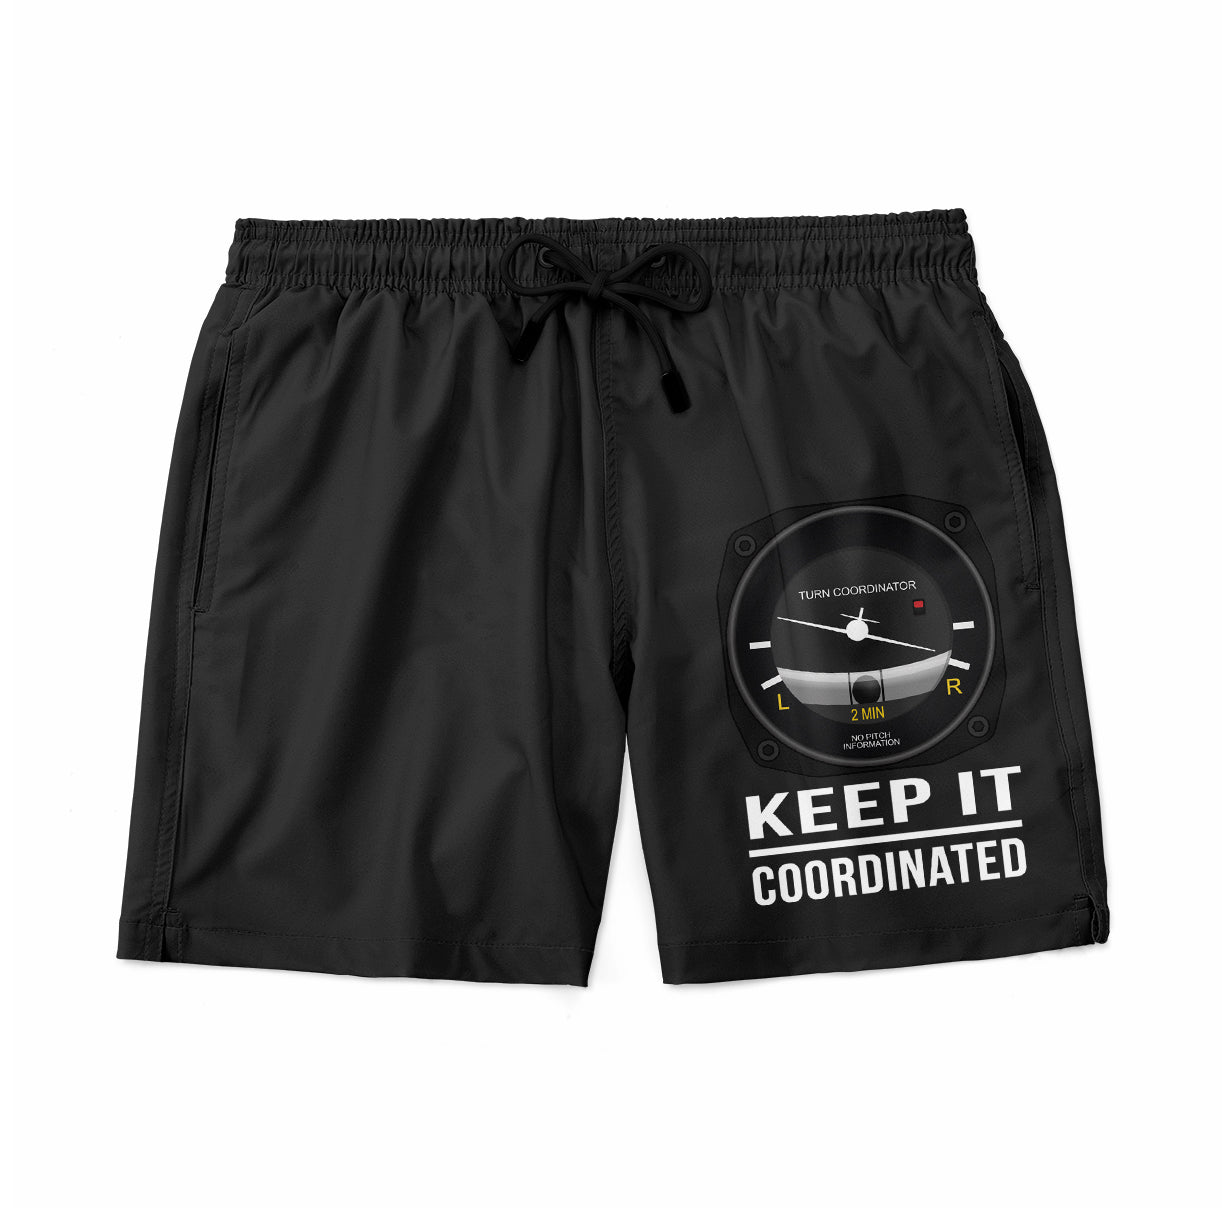 Keep It Coordinated Designed Swim Trunks & Shorts